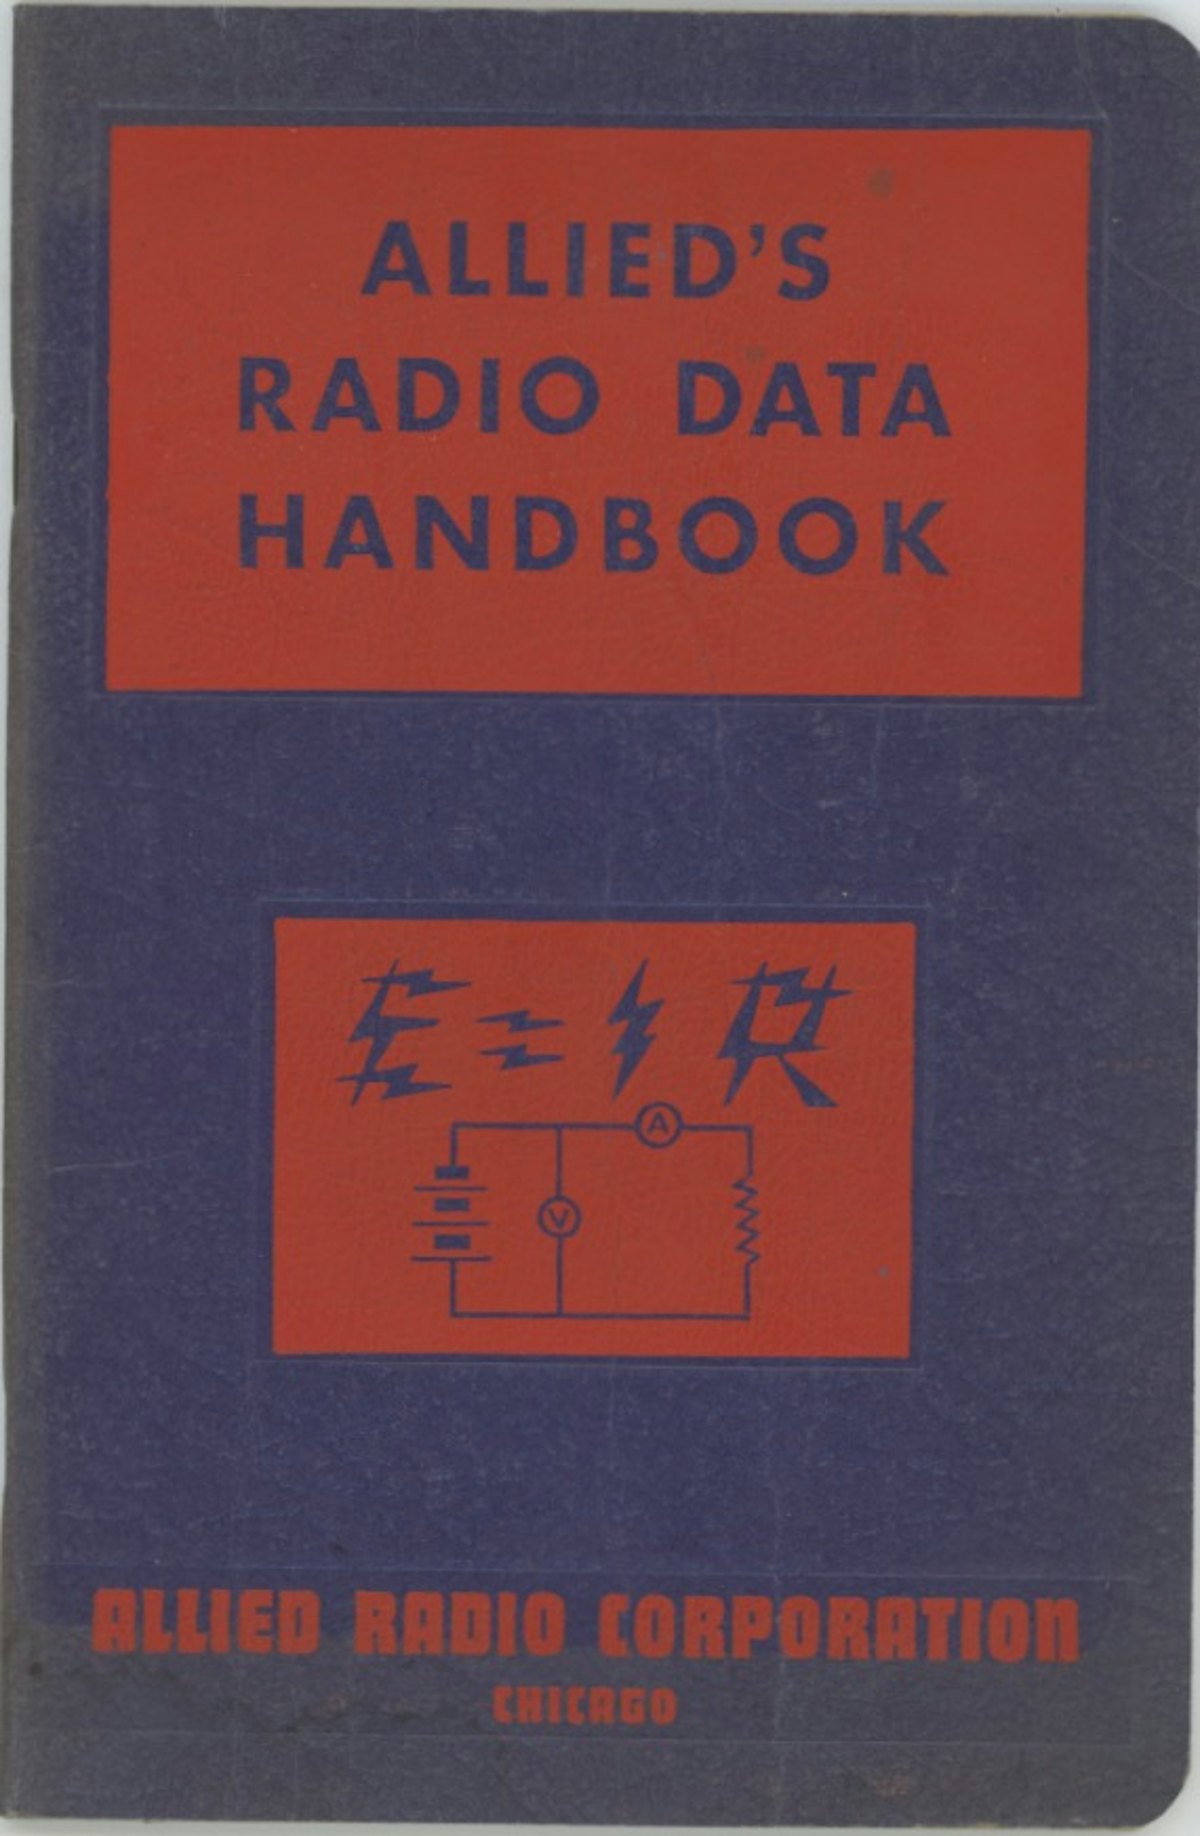 Allied's Radio Data Handbook